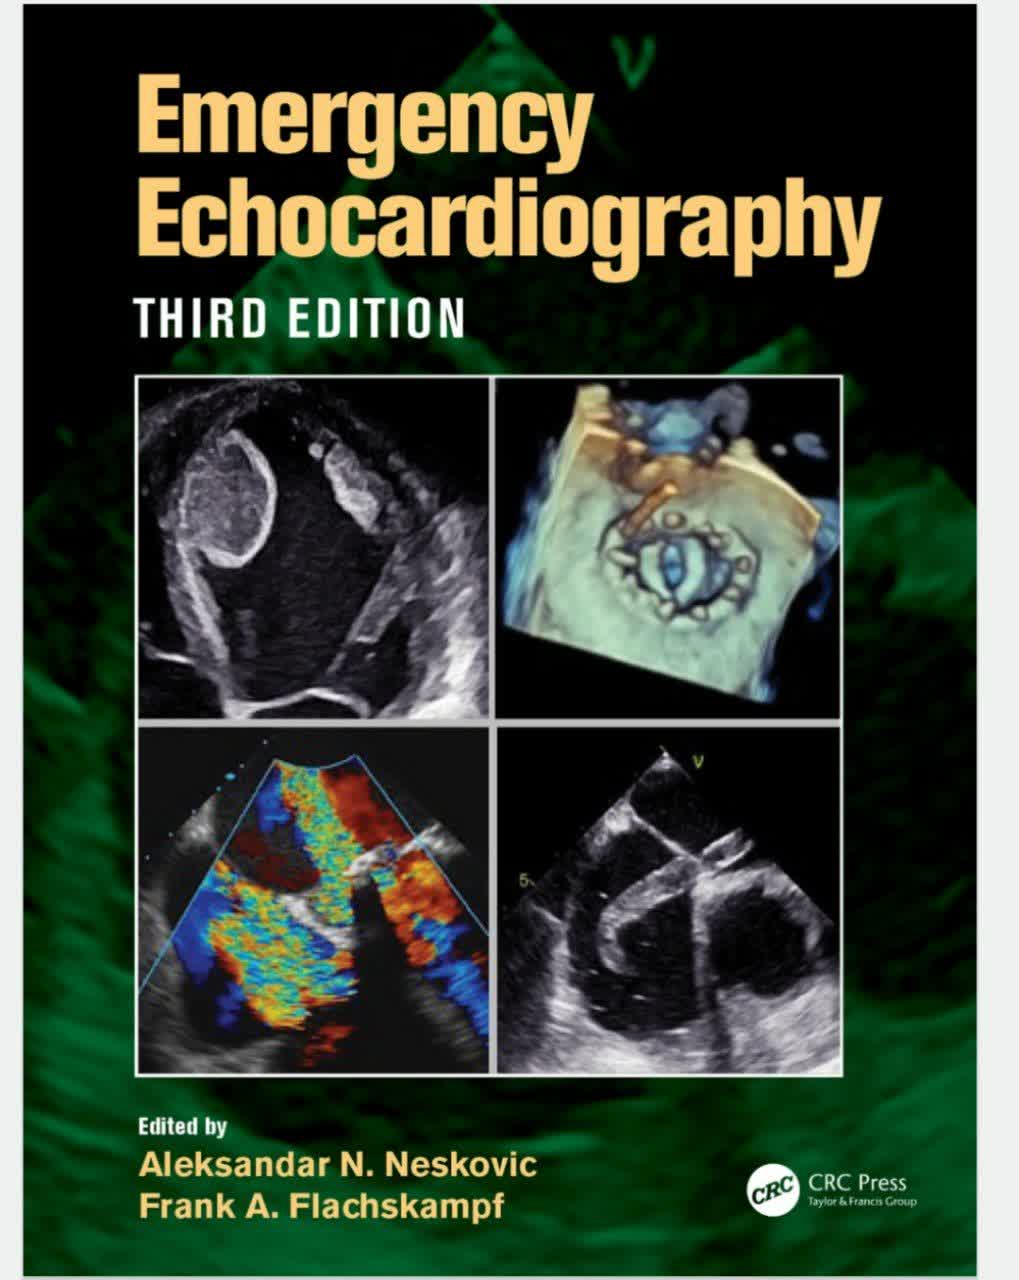 Emergency Echocardiography 3rd edition - اکوکاردیوگرافی اورژانسی